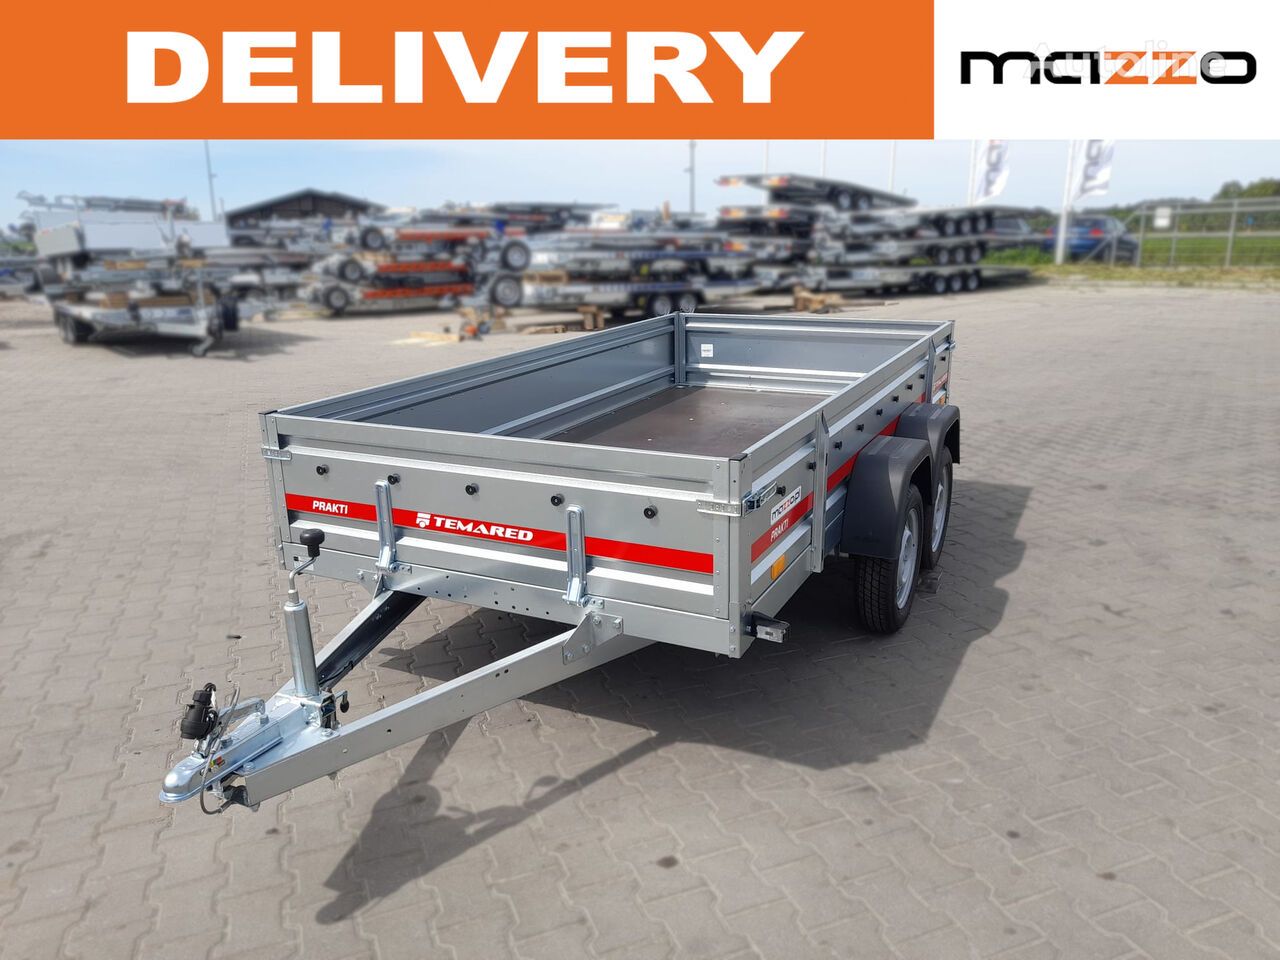 new p3015/2 300x150cm, 750kg twin axles!  light trailer